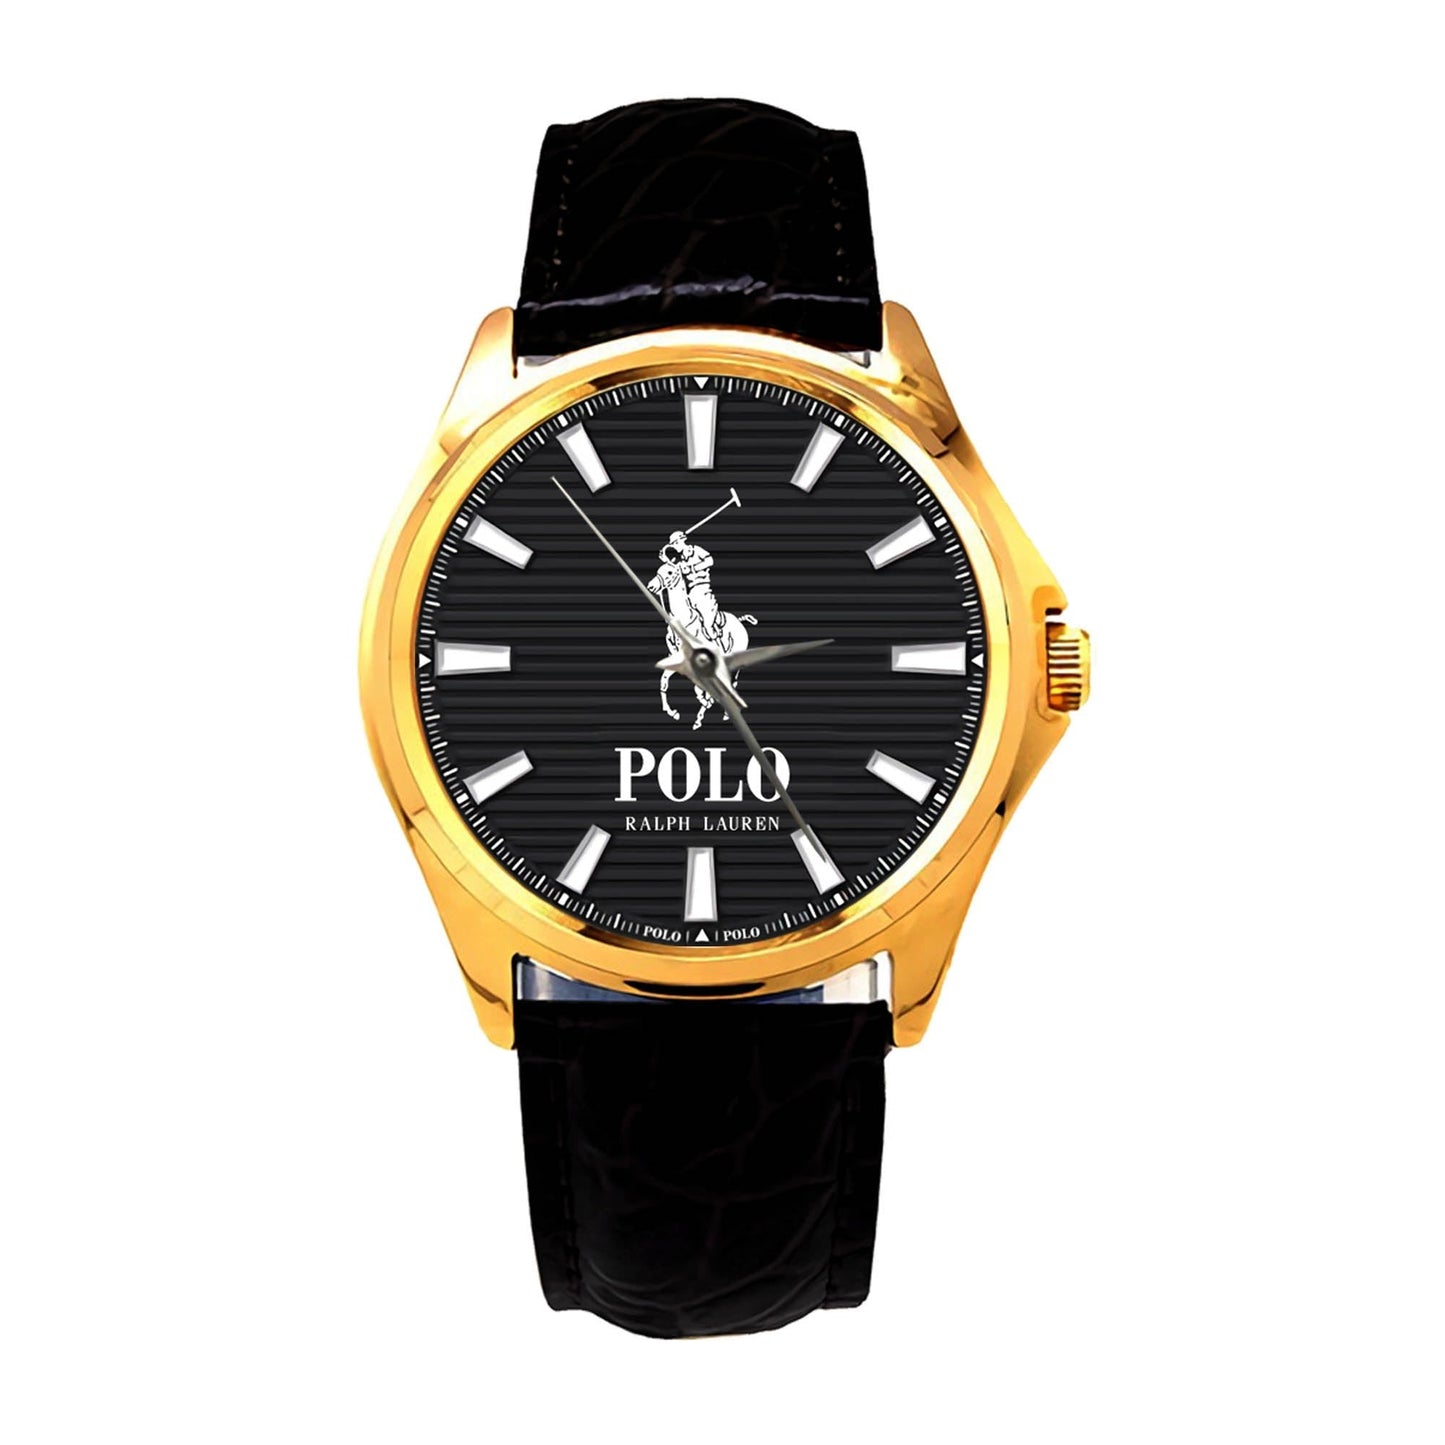 Polo Ralph Lauren Watches KP647